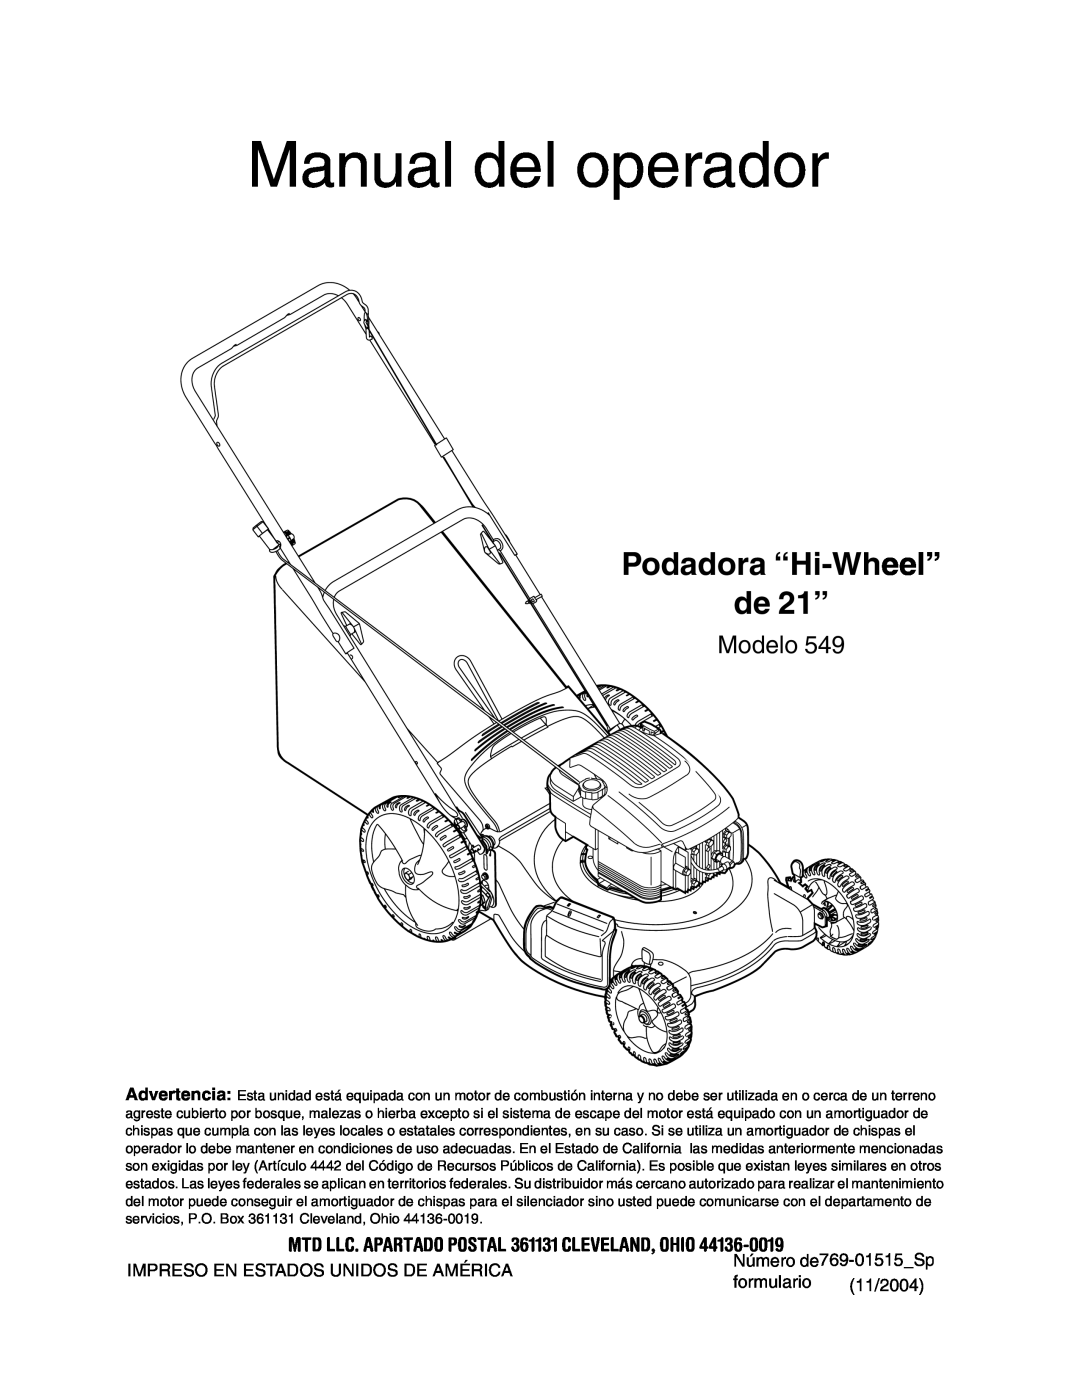 MTD 549 manual Manual del operador, Podadora “Hi-Wheel” de 21”, Modelo, MTD LLC. APARTADO POSTAL 361131 CLEVELAND, OHIO 